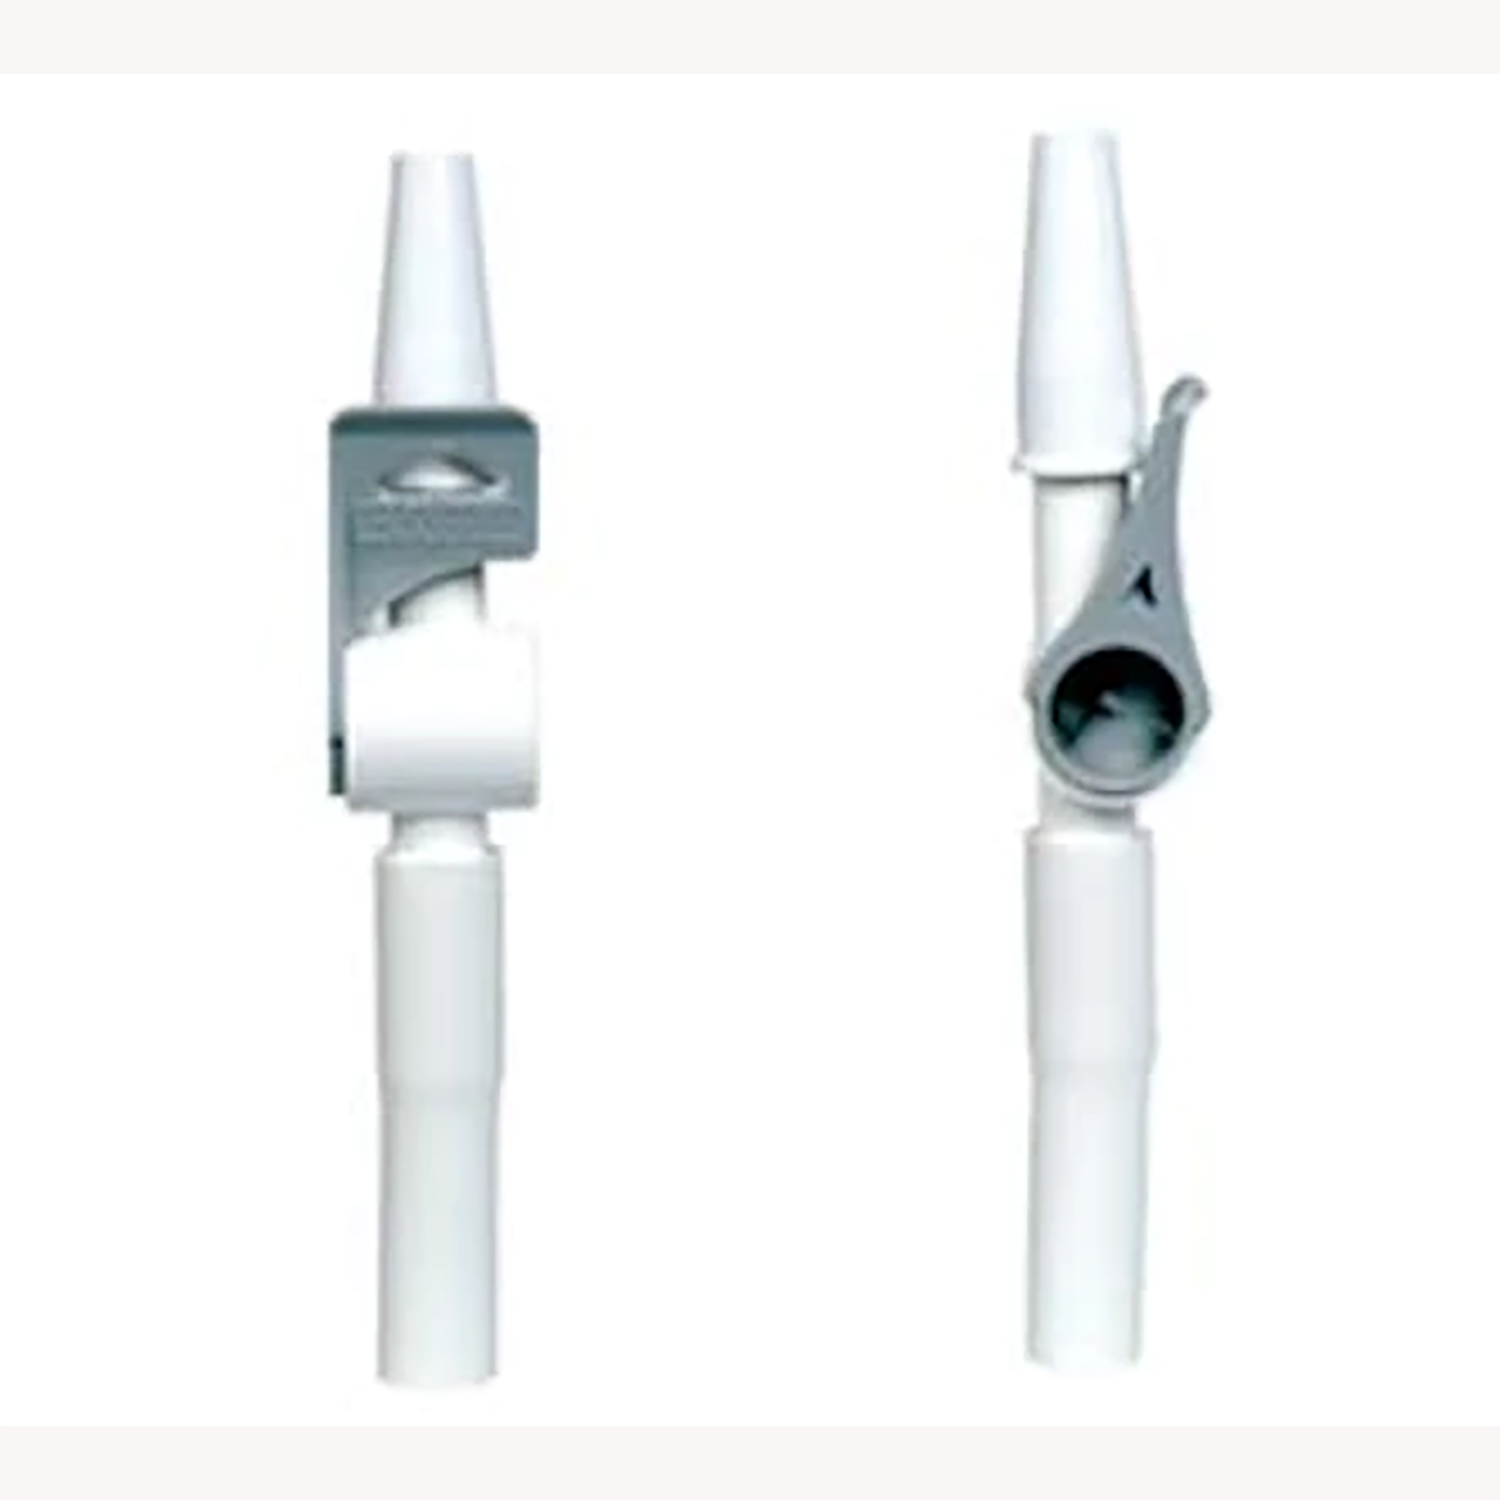 Flip-Flo Foley Catheters Valve | 180° Lever Tap | Pack of 5 (1)